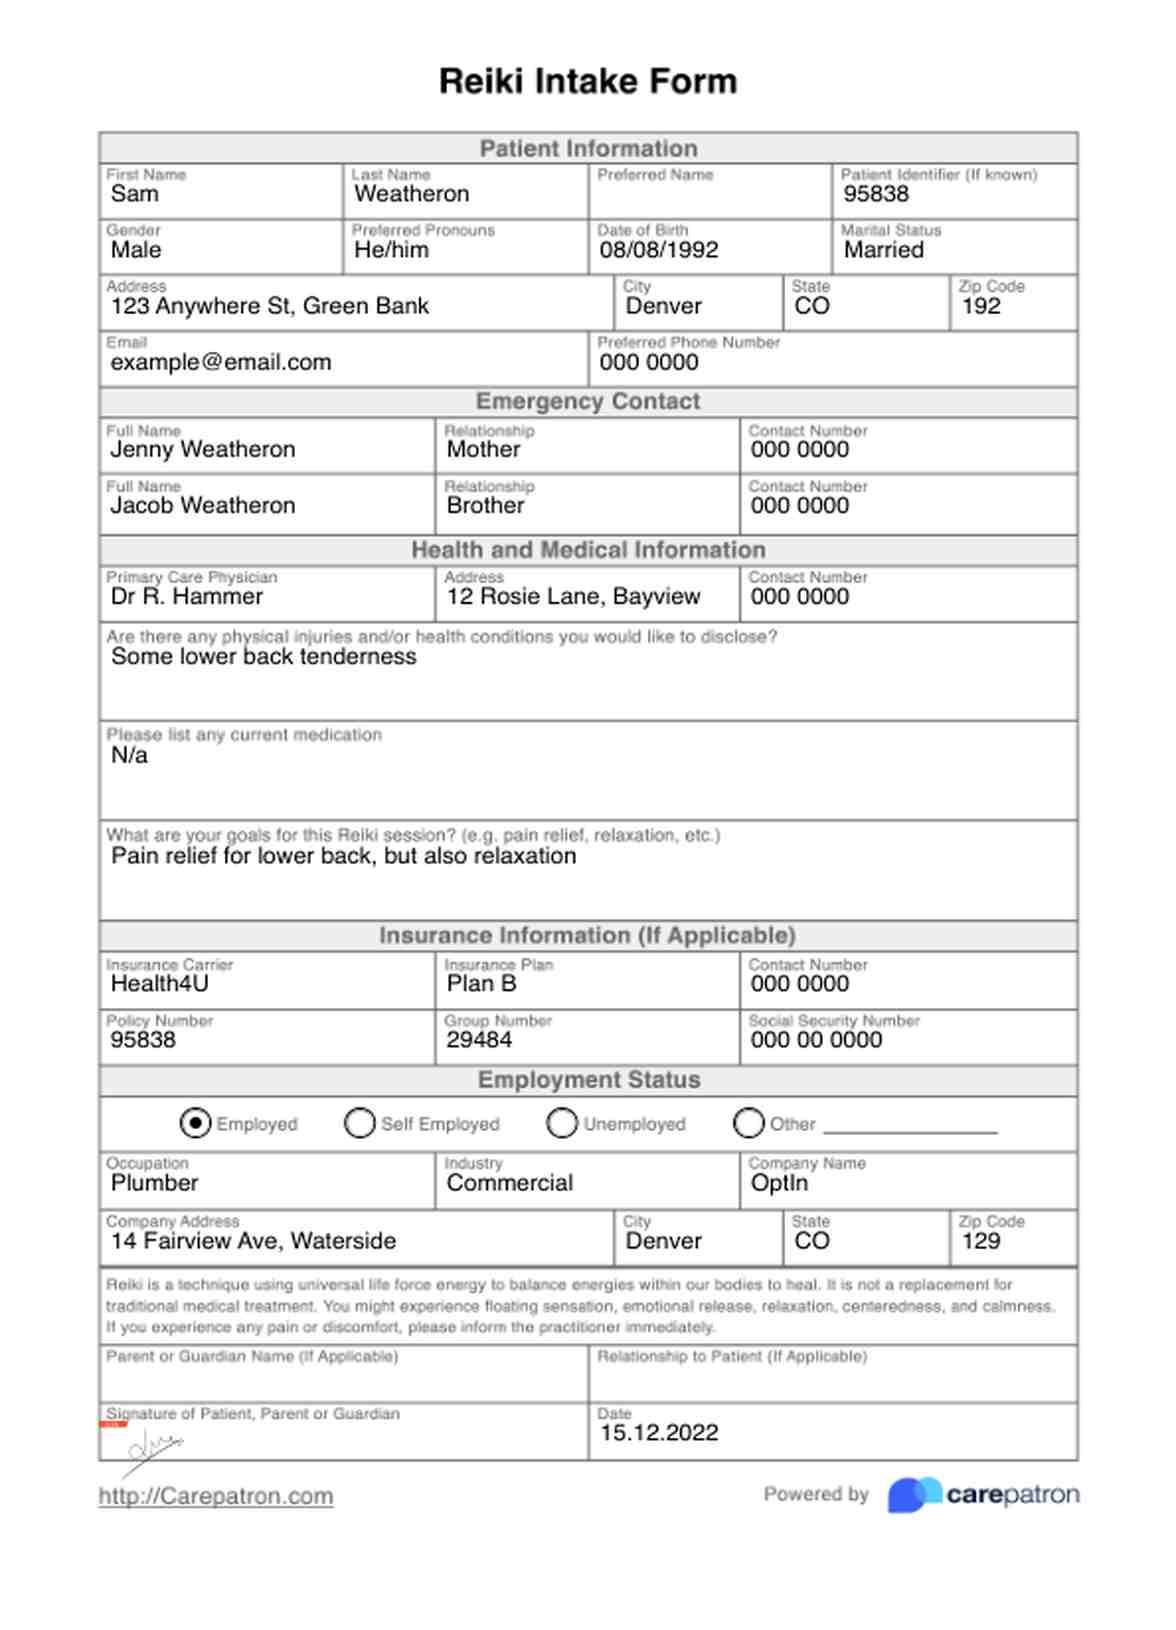 Reiki Intake Form PDF Example